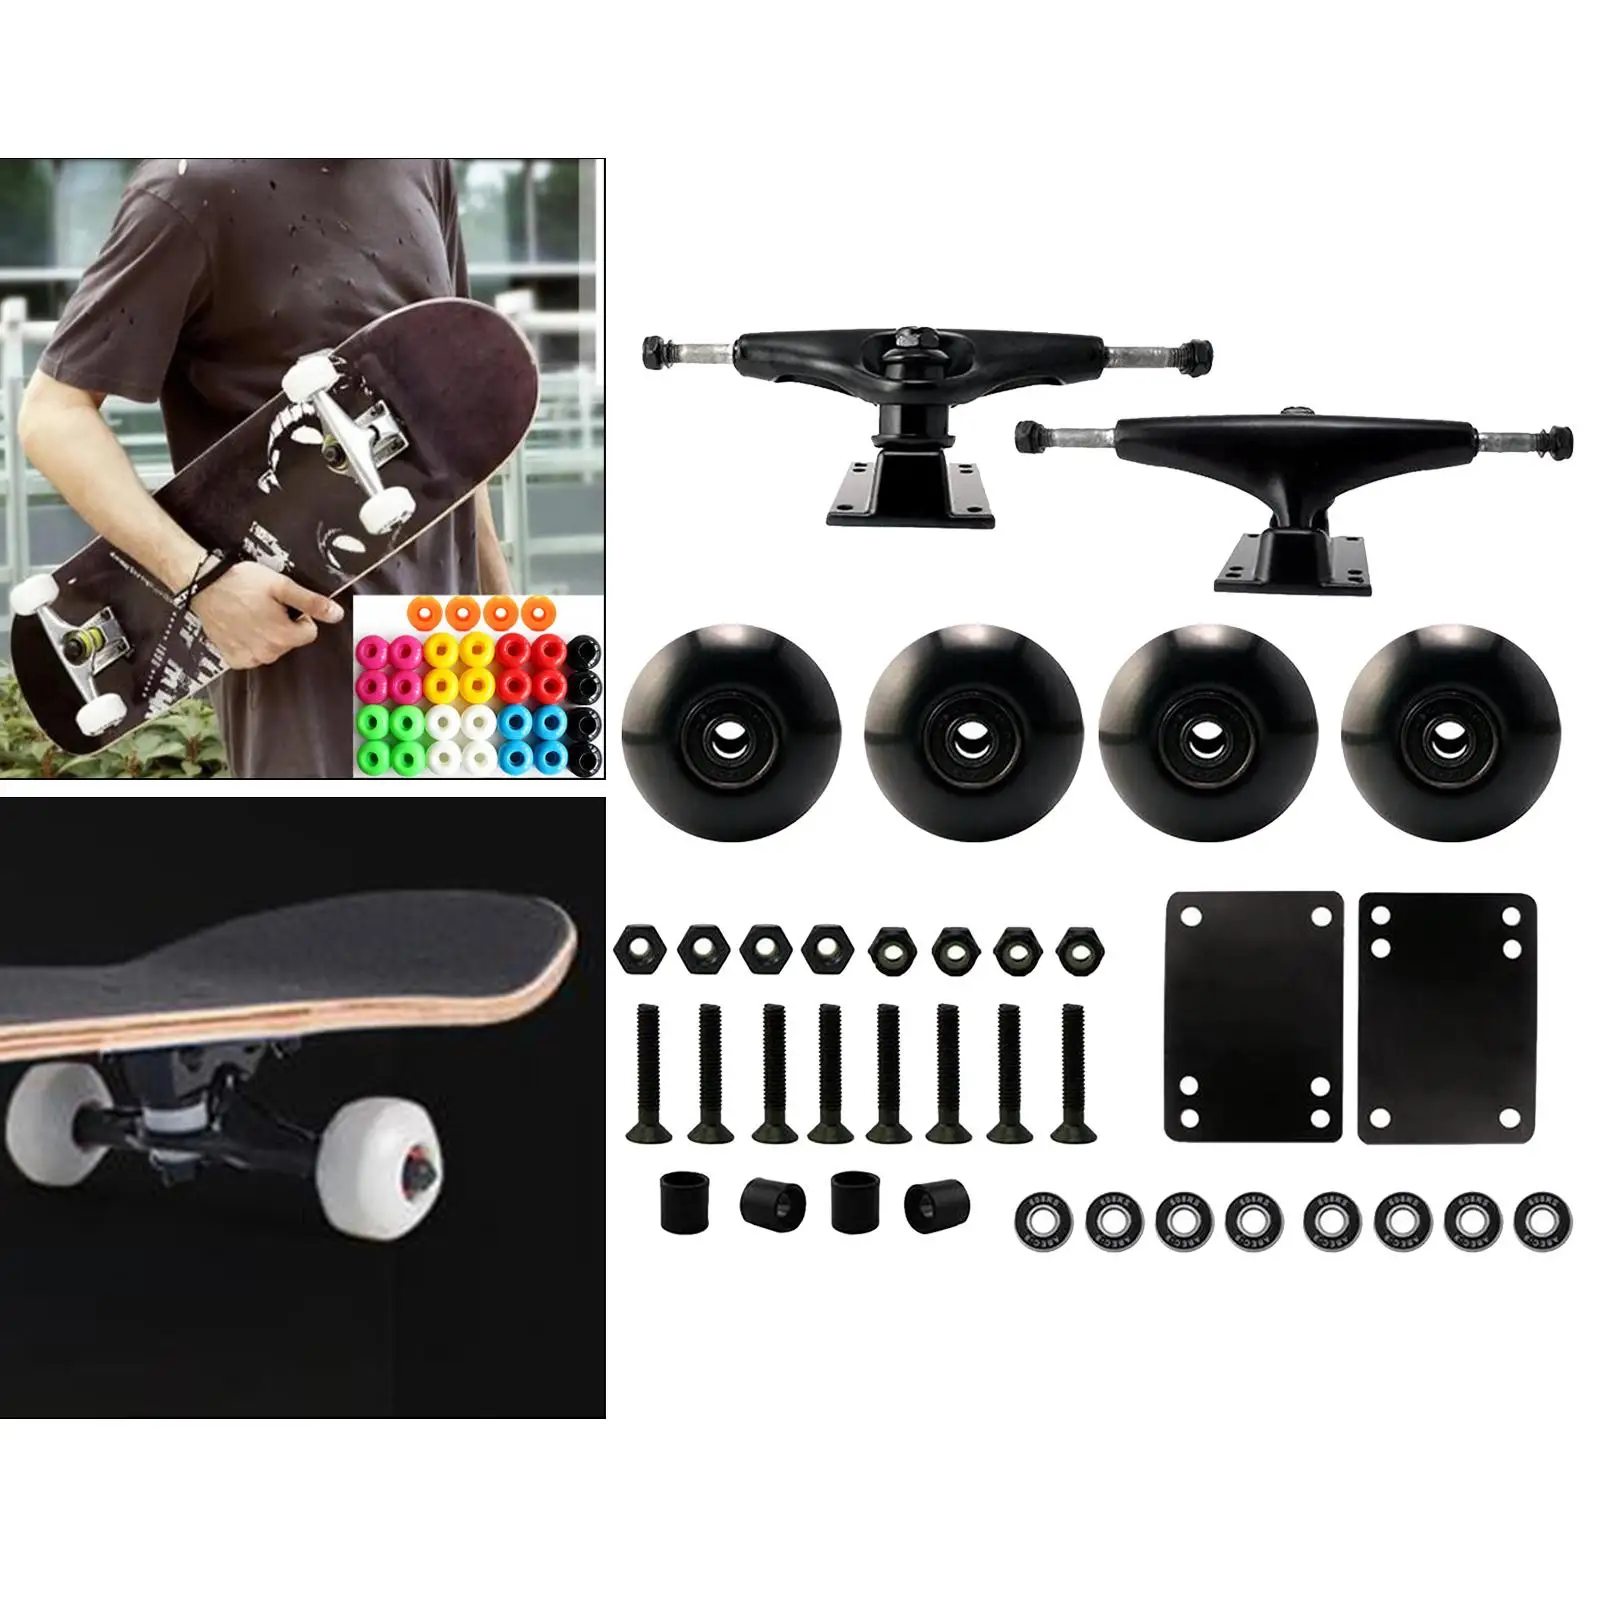 Skateboard Wheels with Bearings 52mm, Skateboard Trucks, Skateboard Riser Pads,